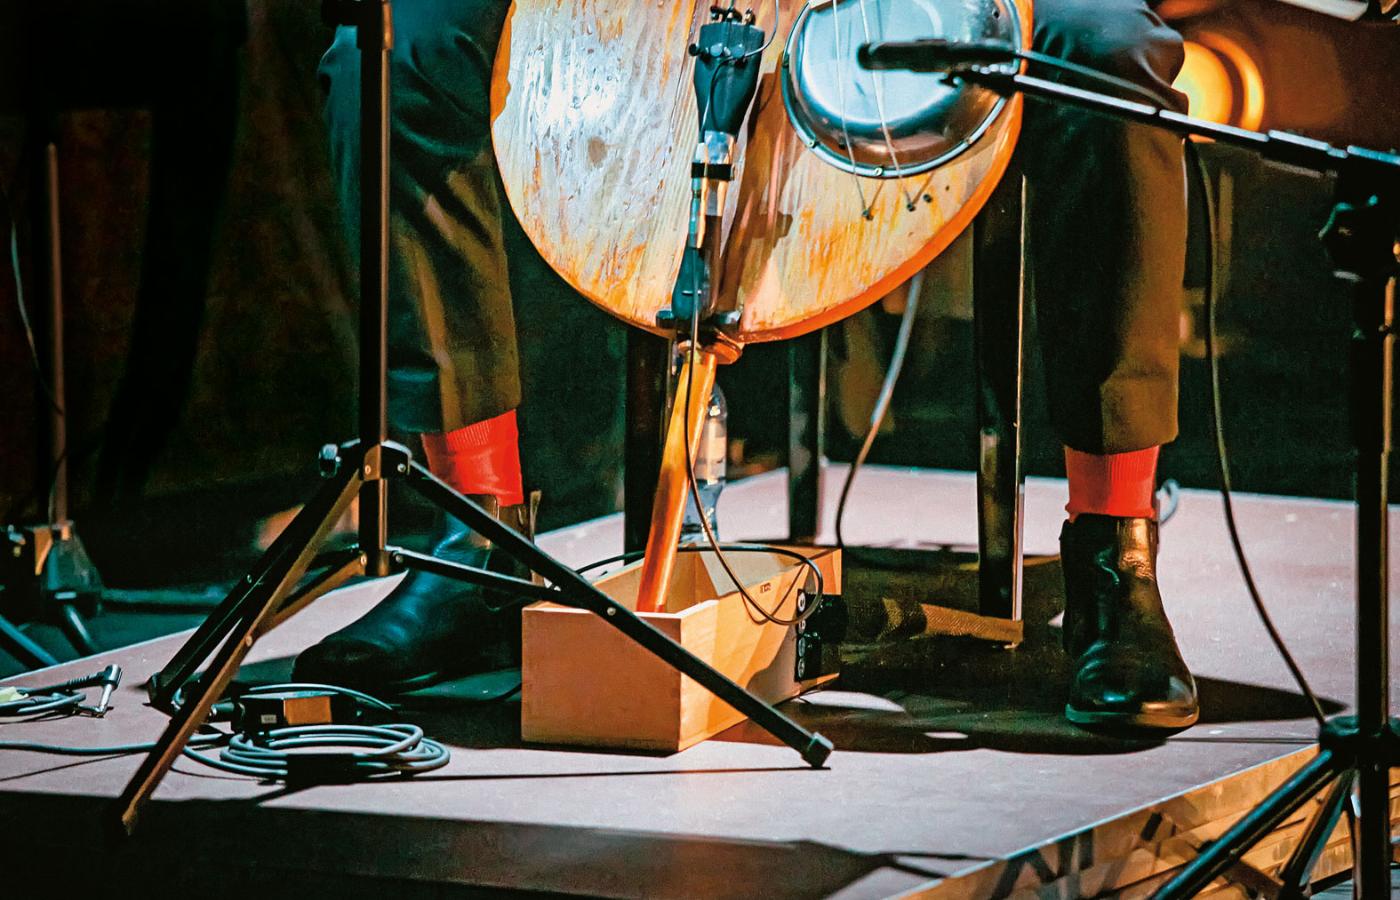 Diabelskie skrzypce na festiwalu Kody, 2020 r.